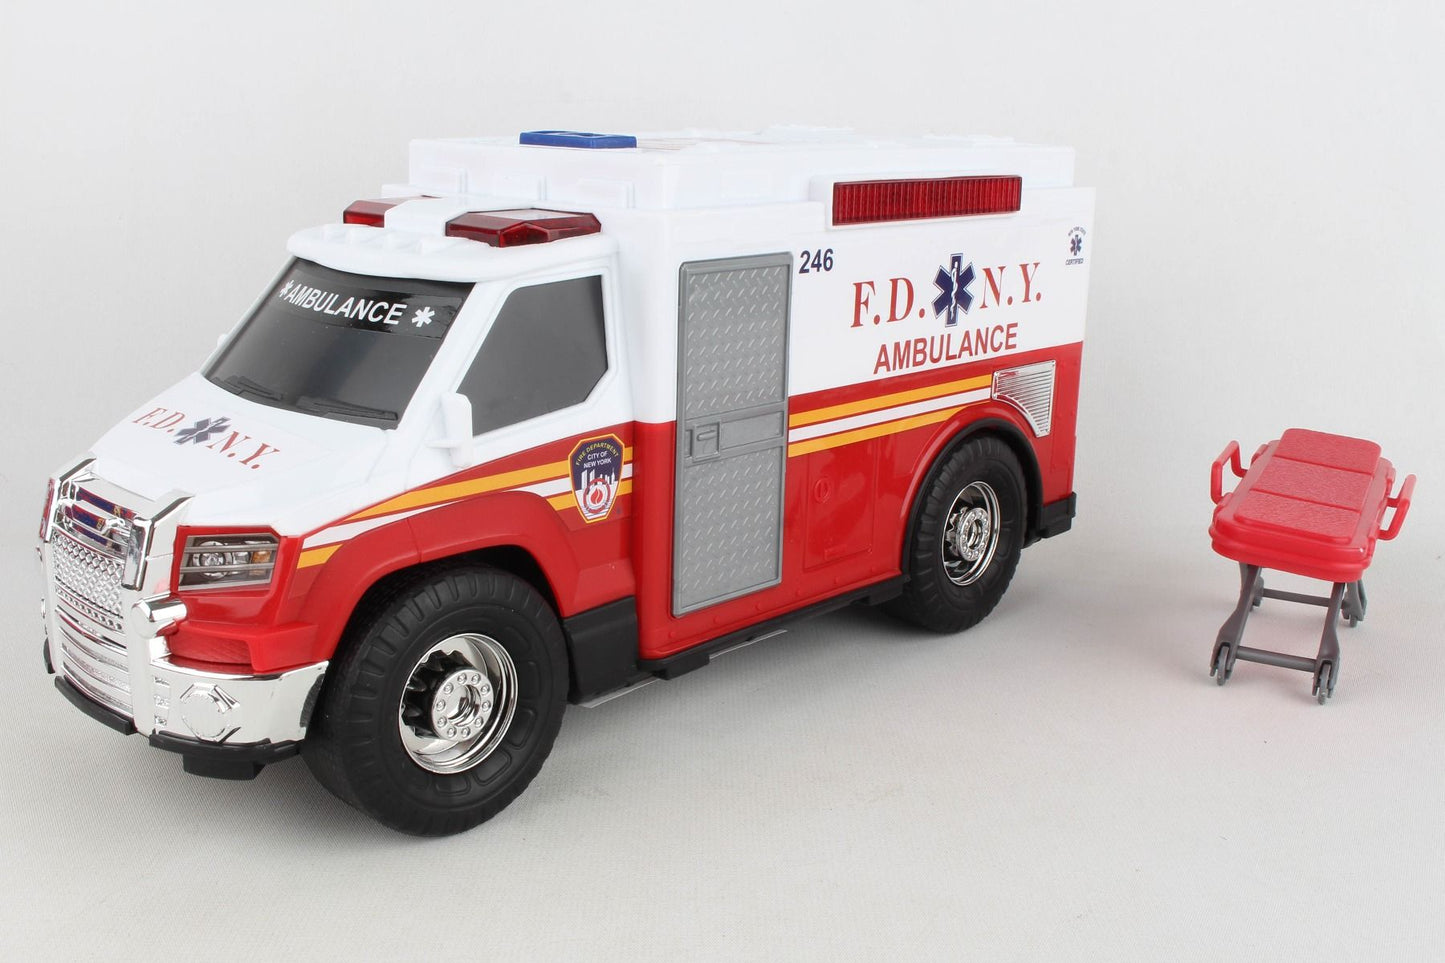 FDNY Ambulance W/ Lights & Sound